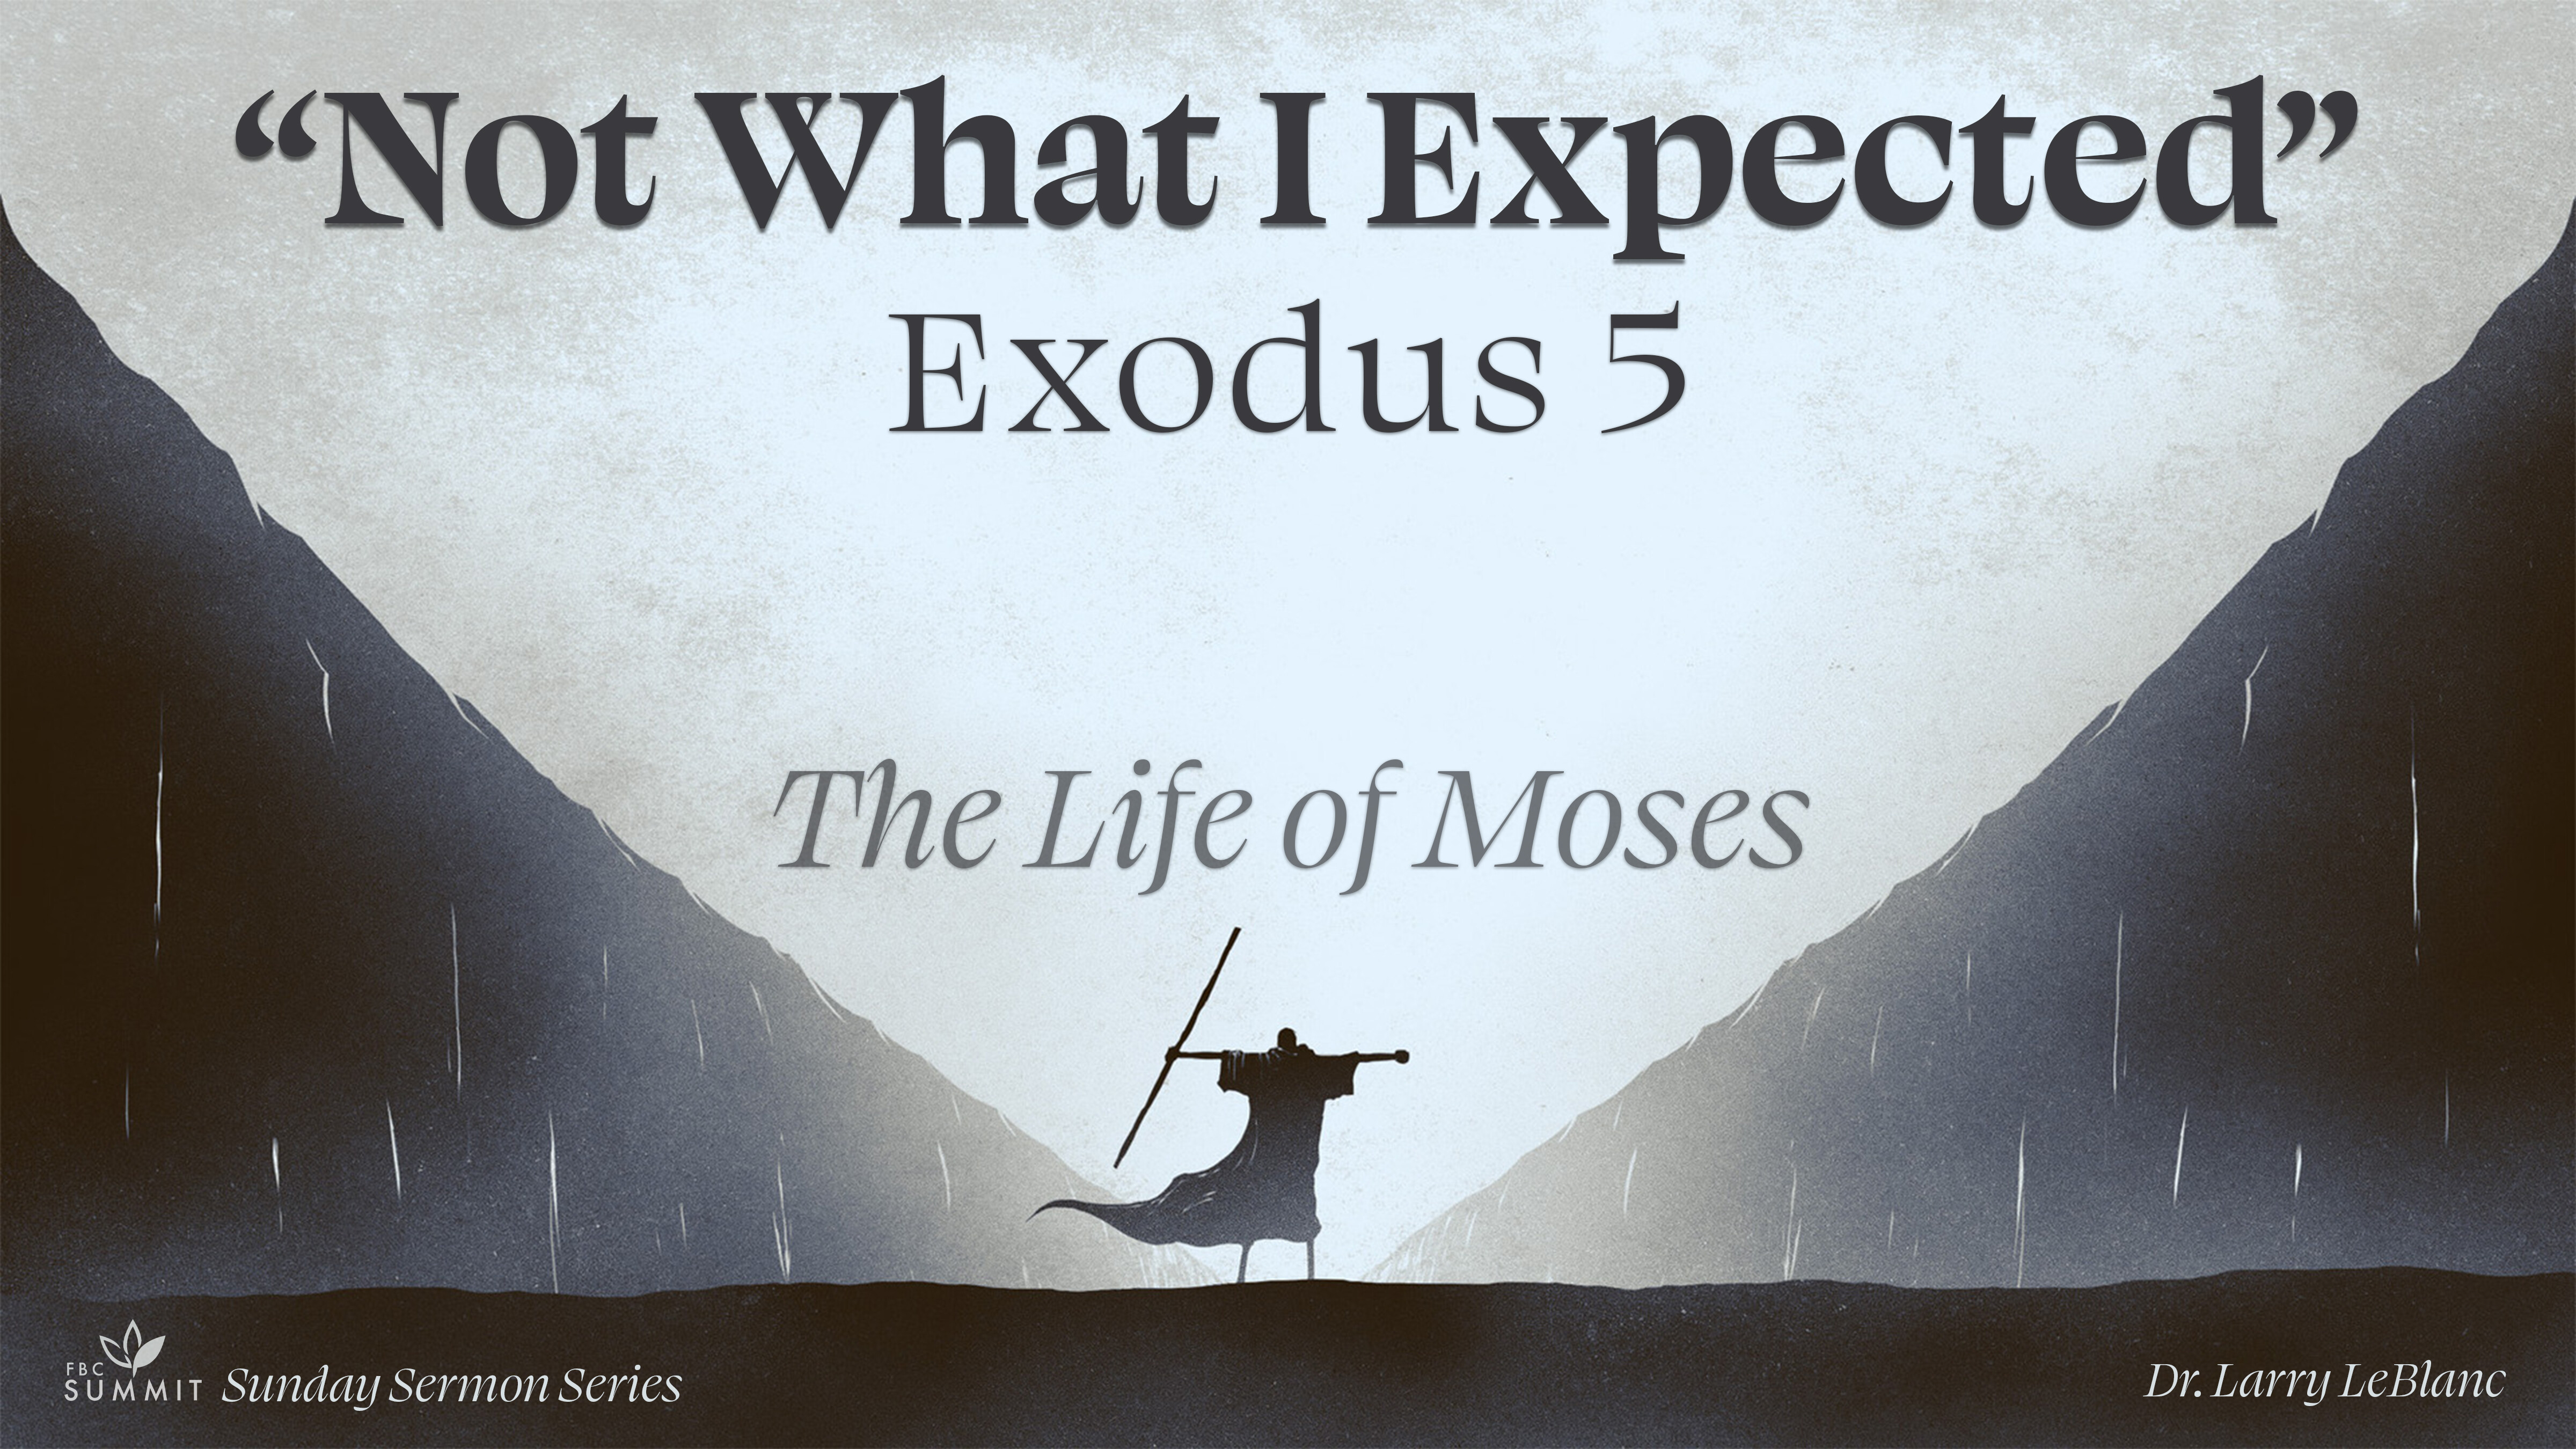 "Not What I Expected" Exodus 5 // Dr. Larry Leblanc